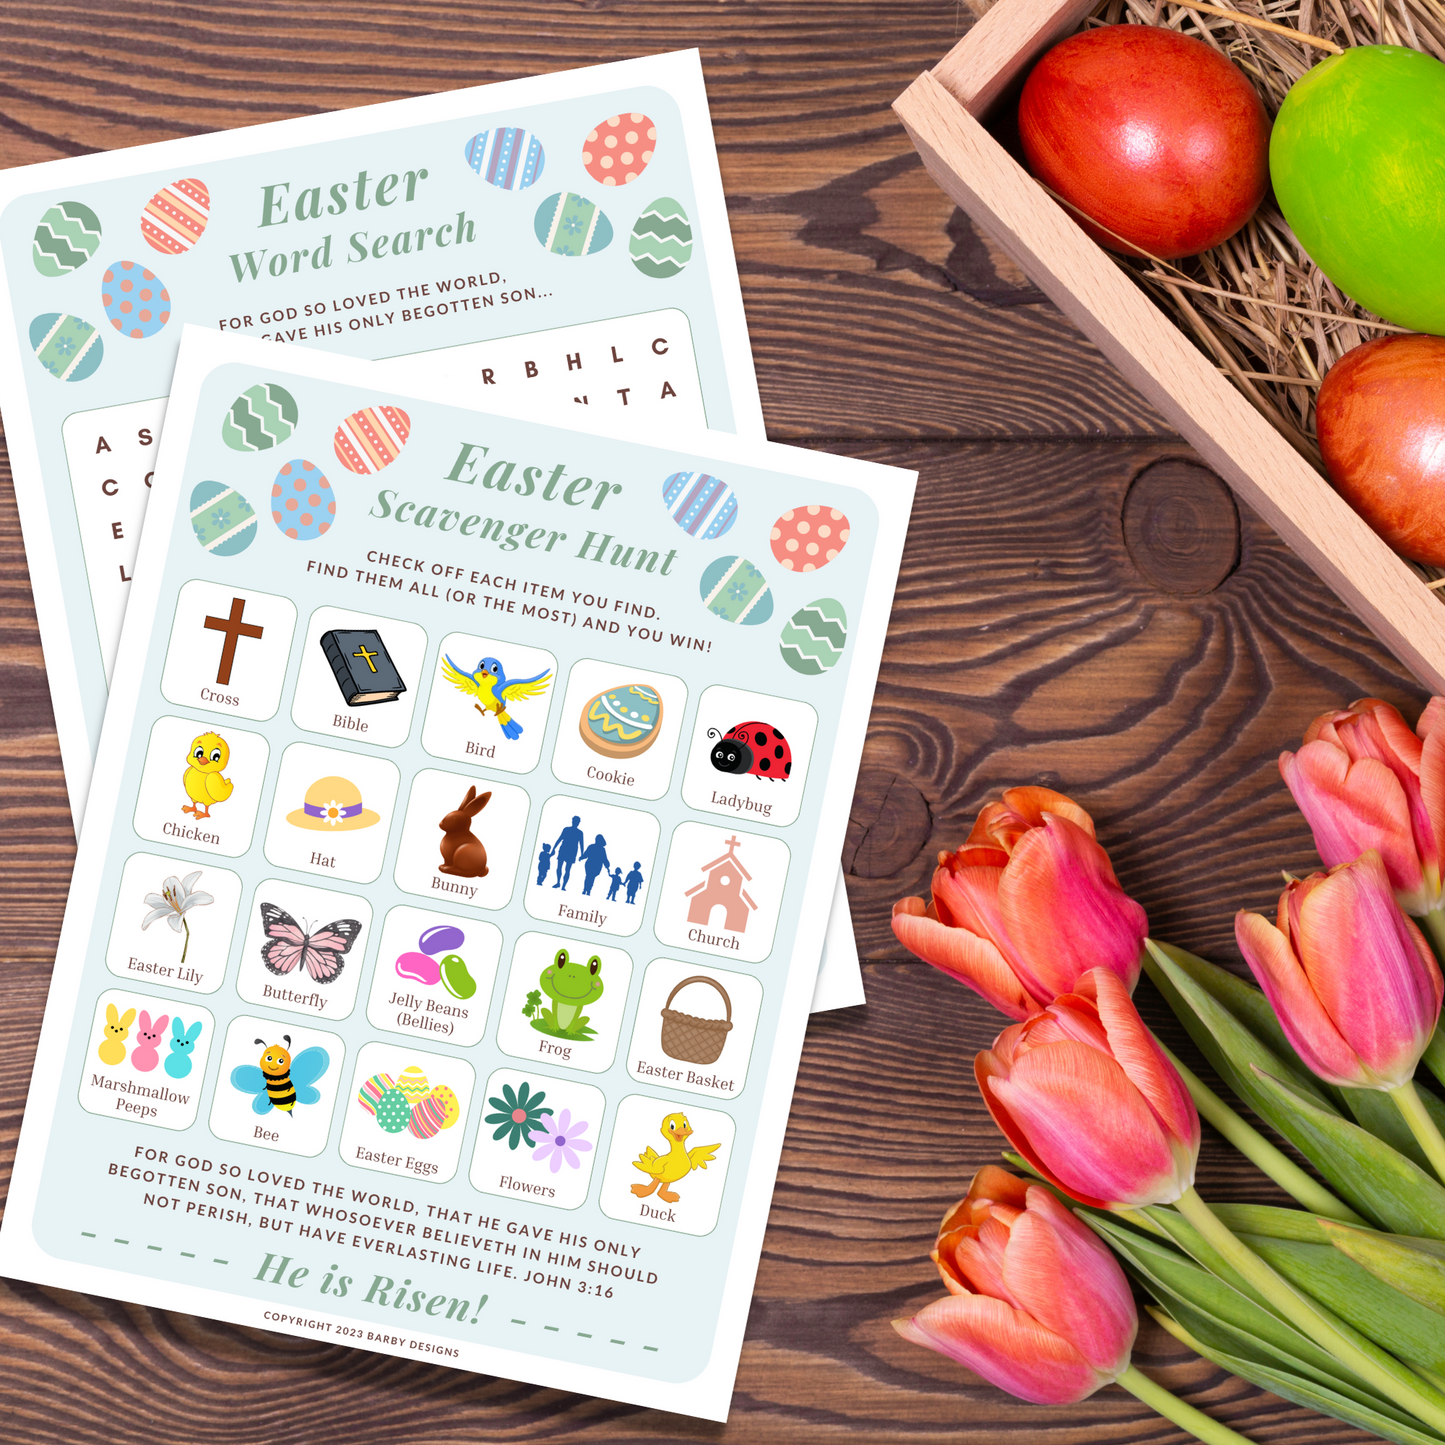 Easter Fun Activity Downloads - Easter Scavenger Hunt & Easter Word Search | oak7west.com